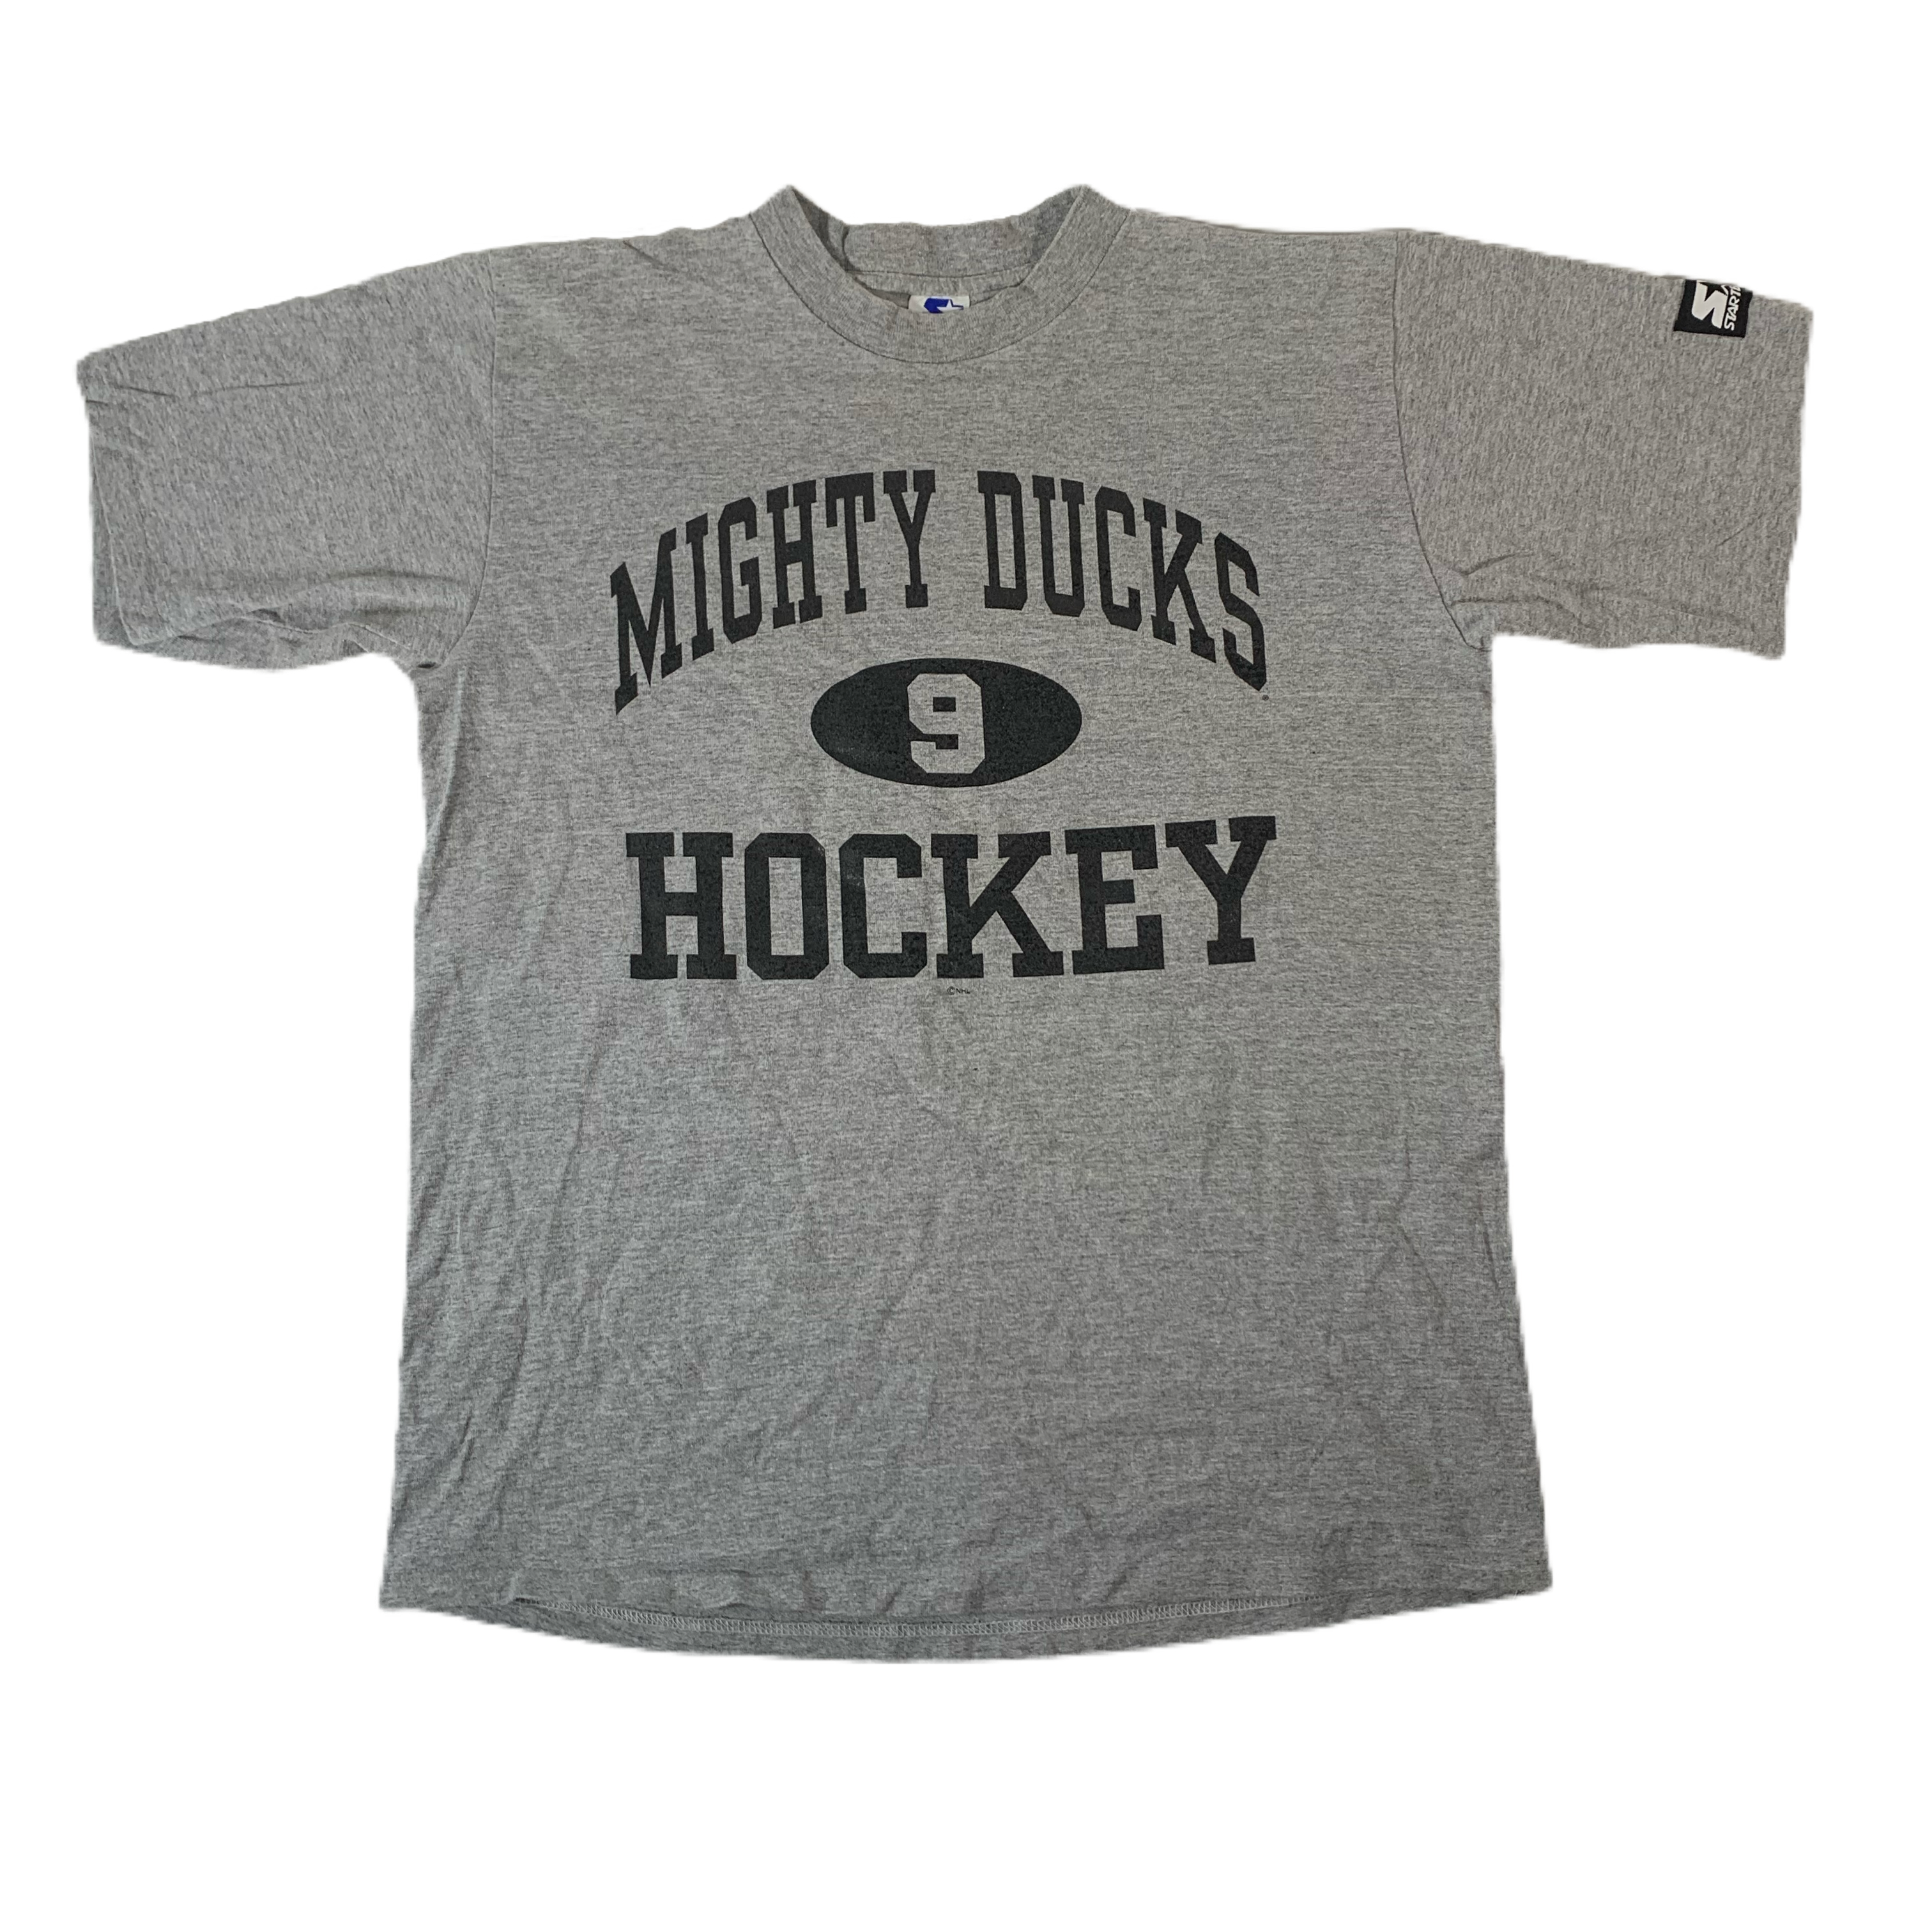 Vintage Starter Mighty Ducks Paul Kariya Hockey Jersey